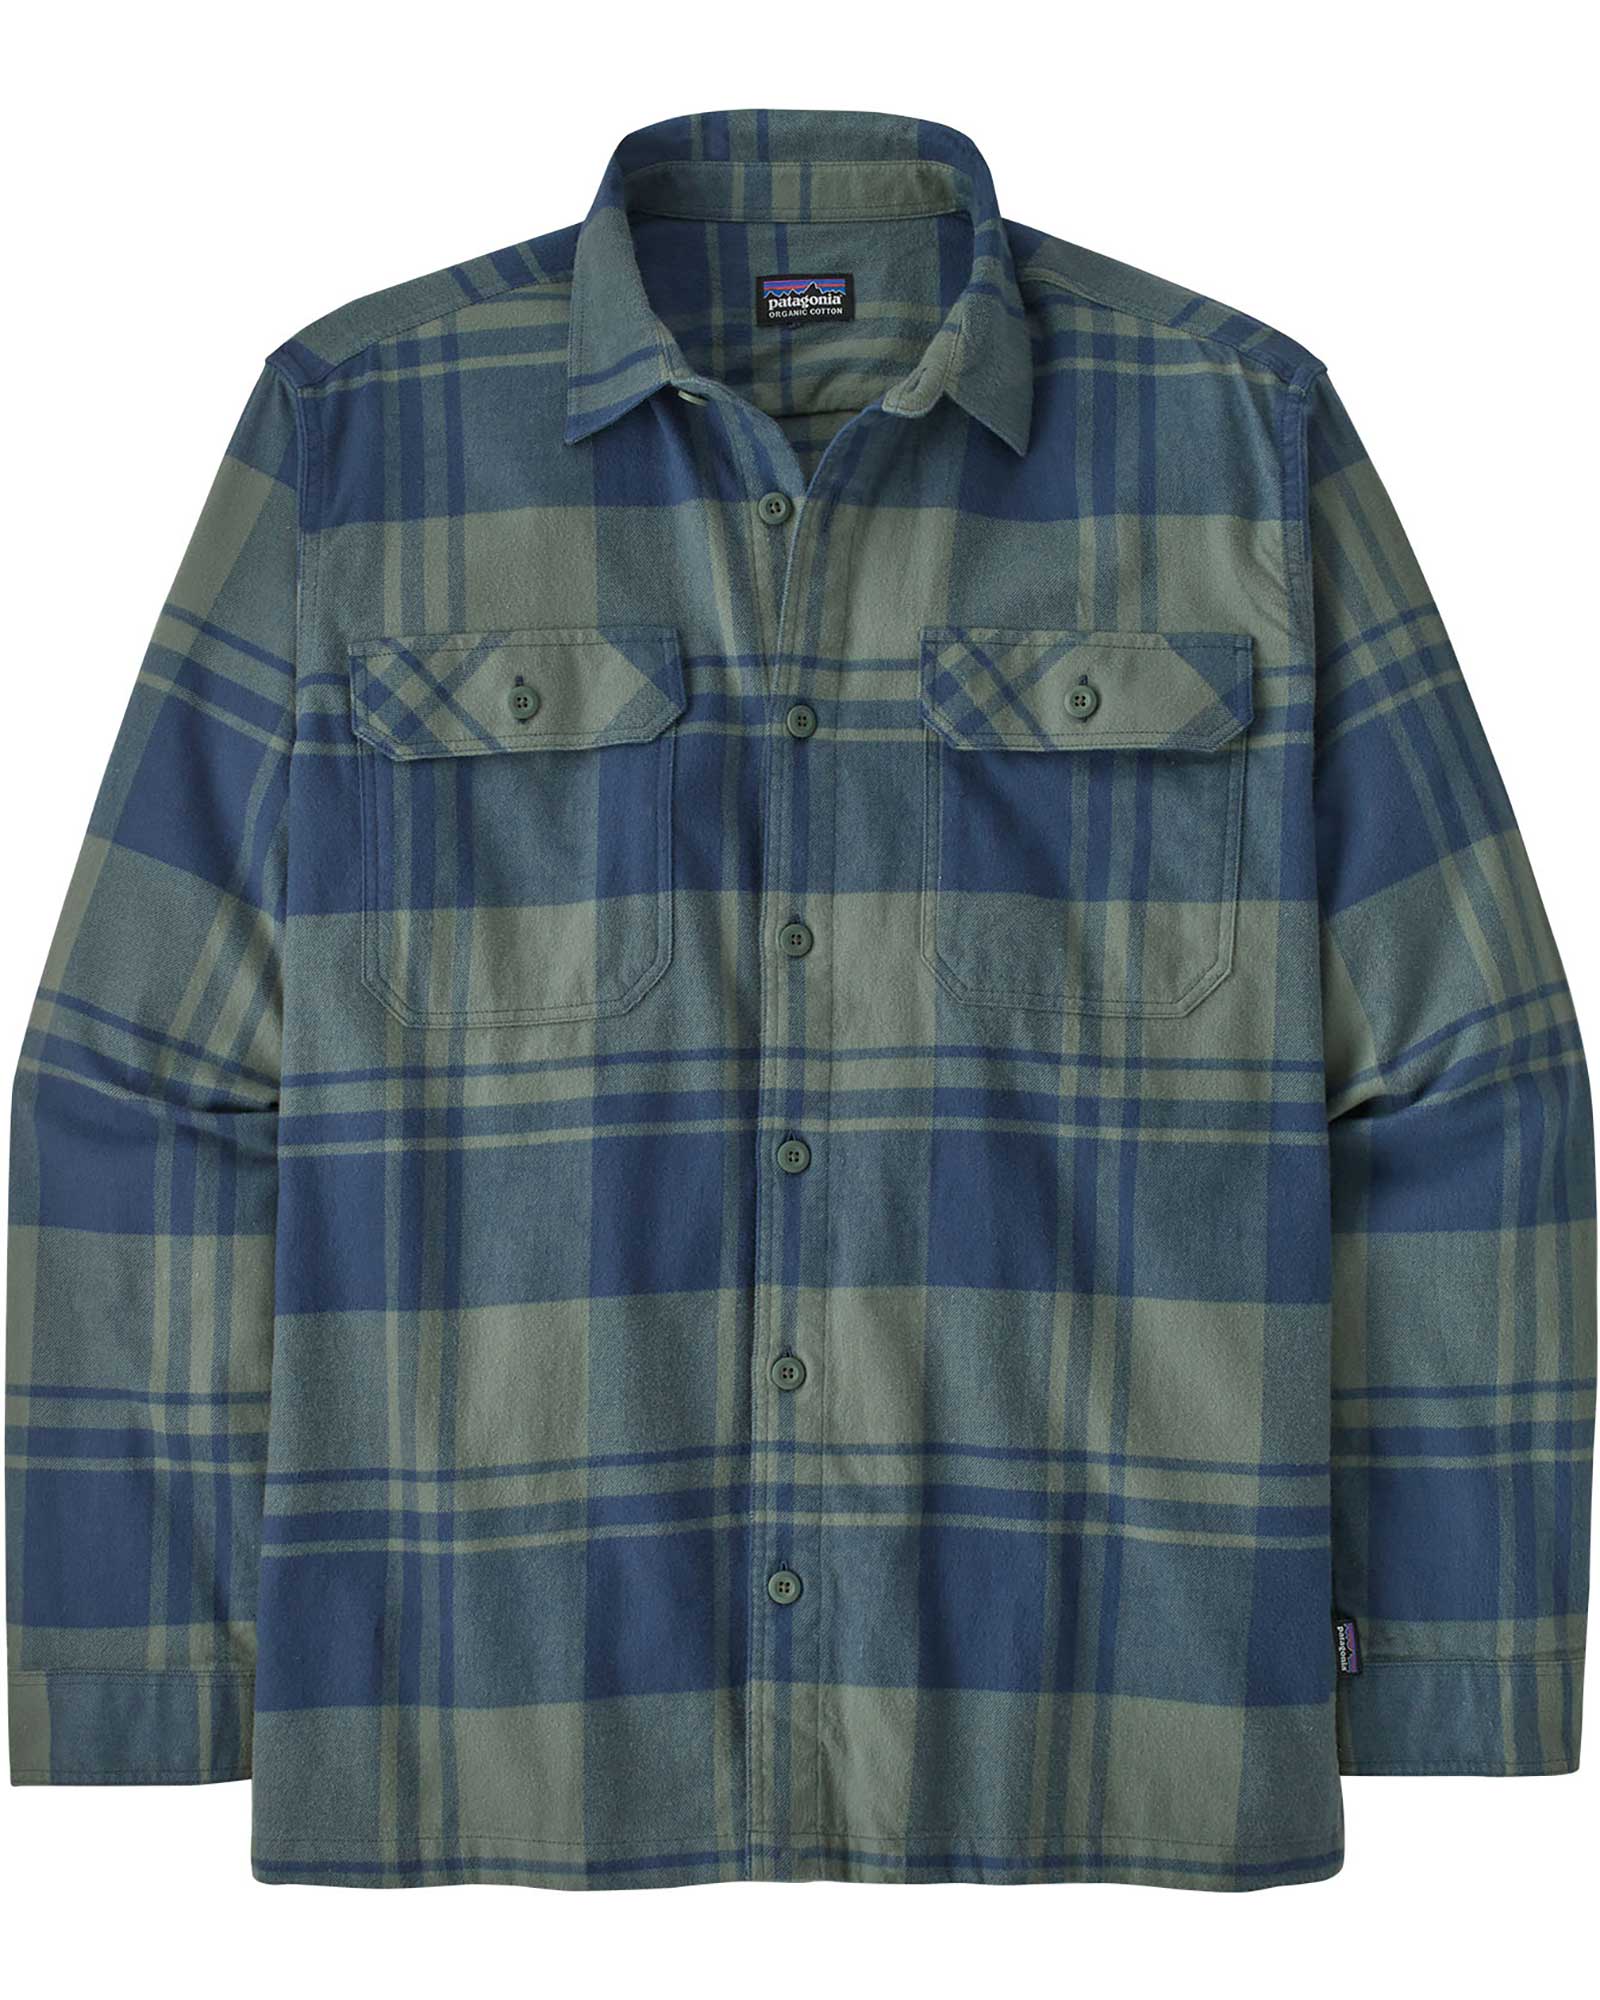 Patagonia Men’s Organic Long Sleeve Flannel Shirt - Hemlock Green/Live Oak S